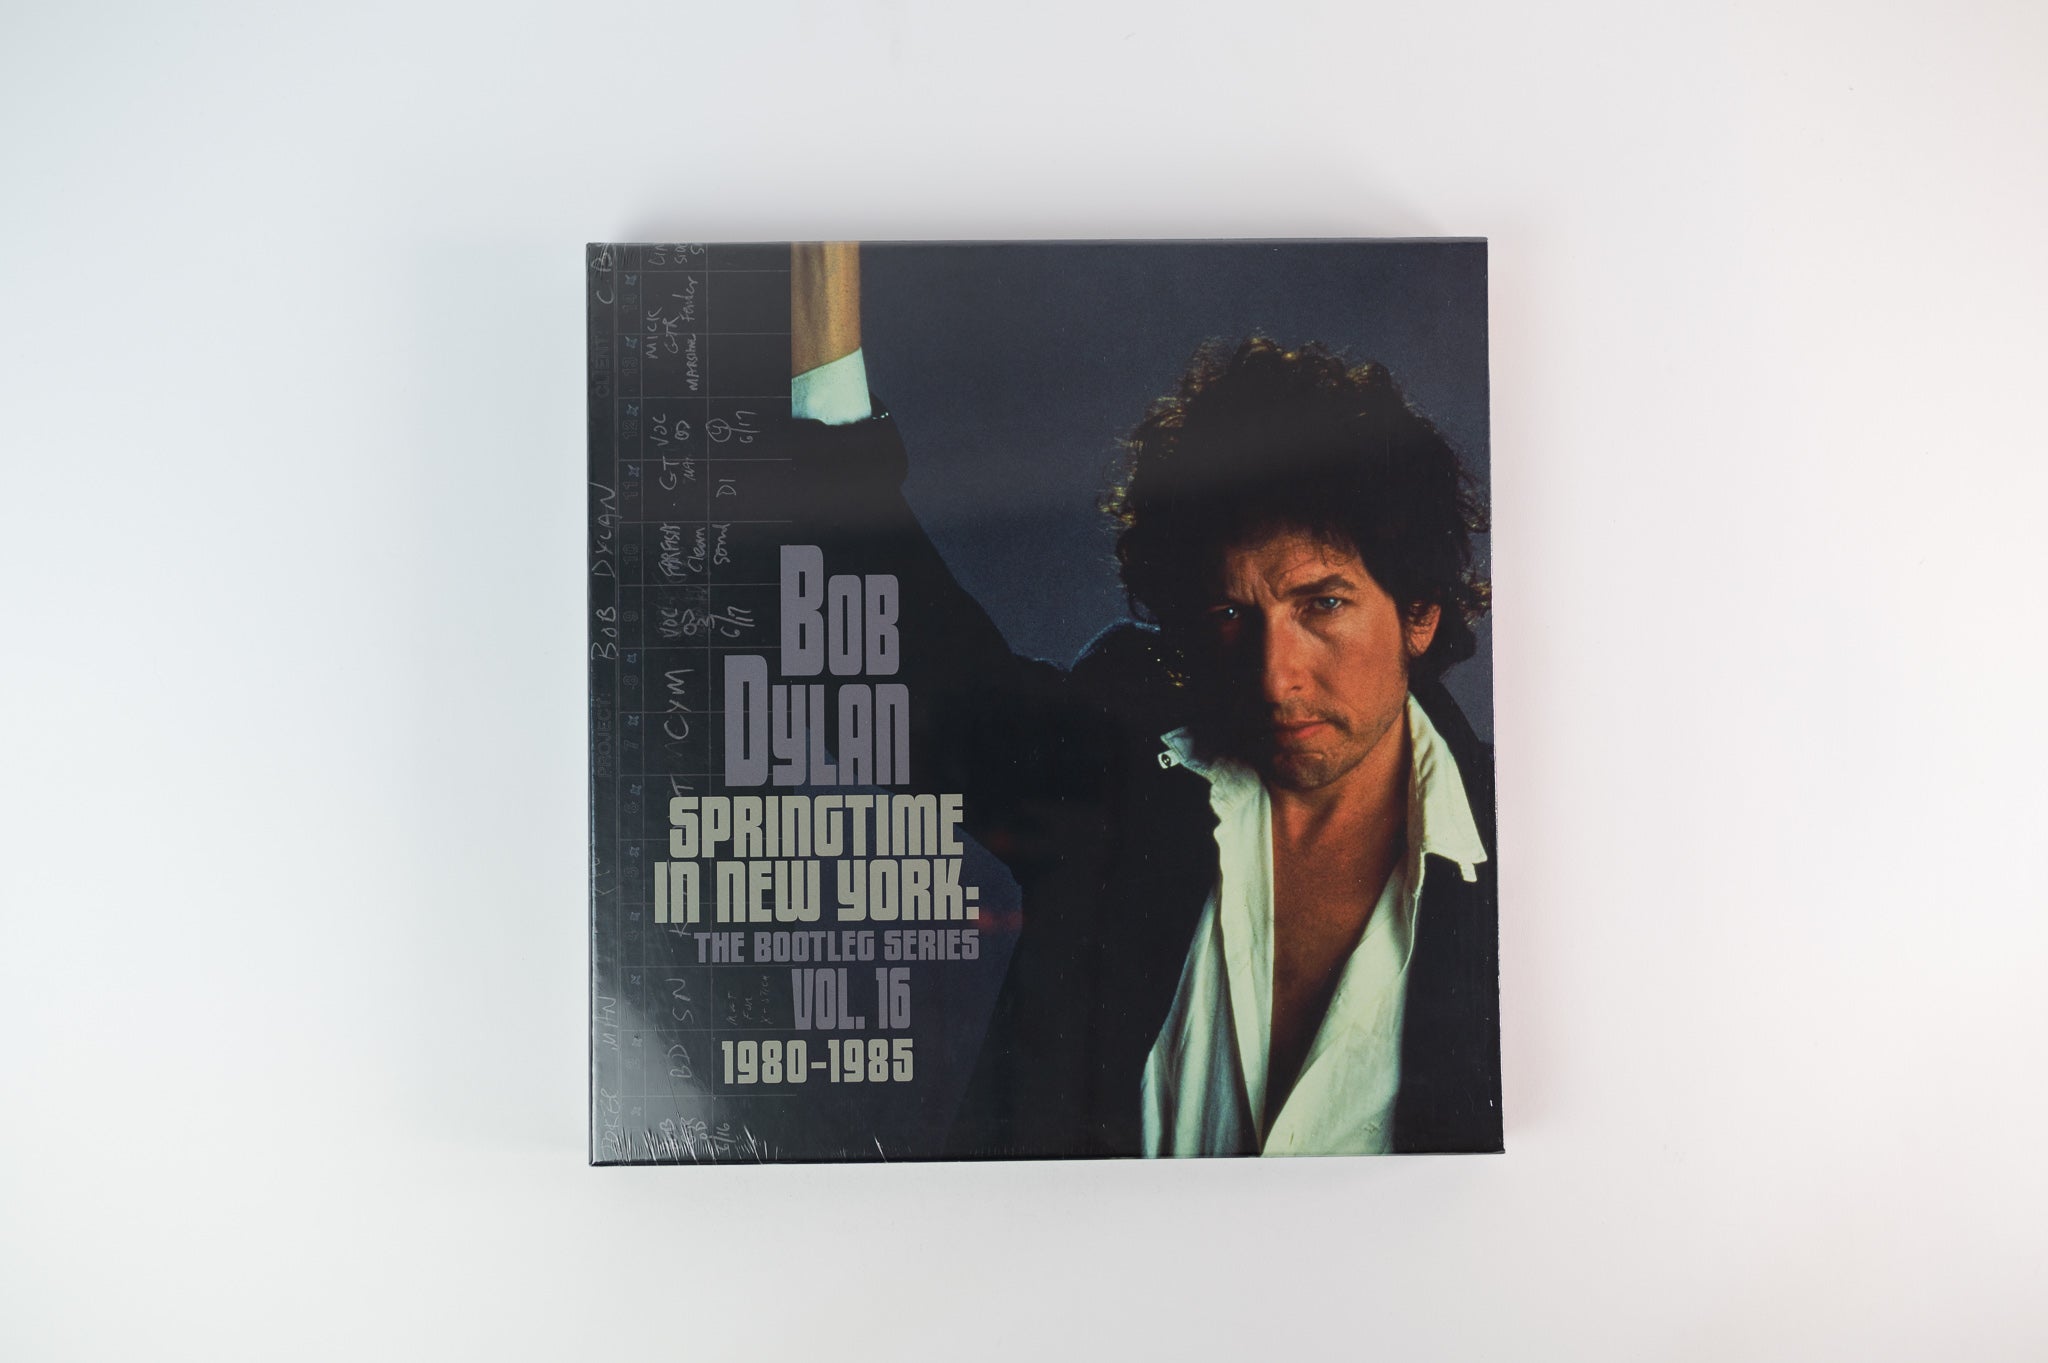 Bob Dylan - Springtime In New York: The Bootleg Series Vol. 16 1980–1985 on Third Man